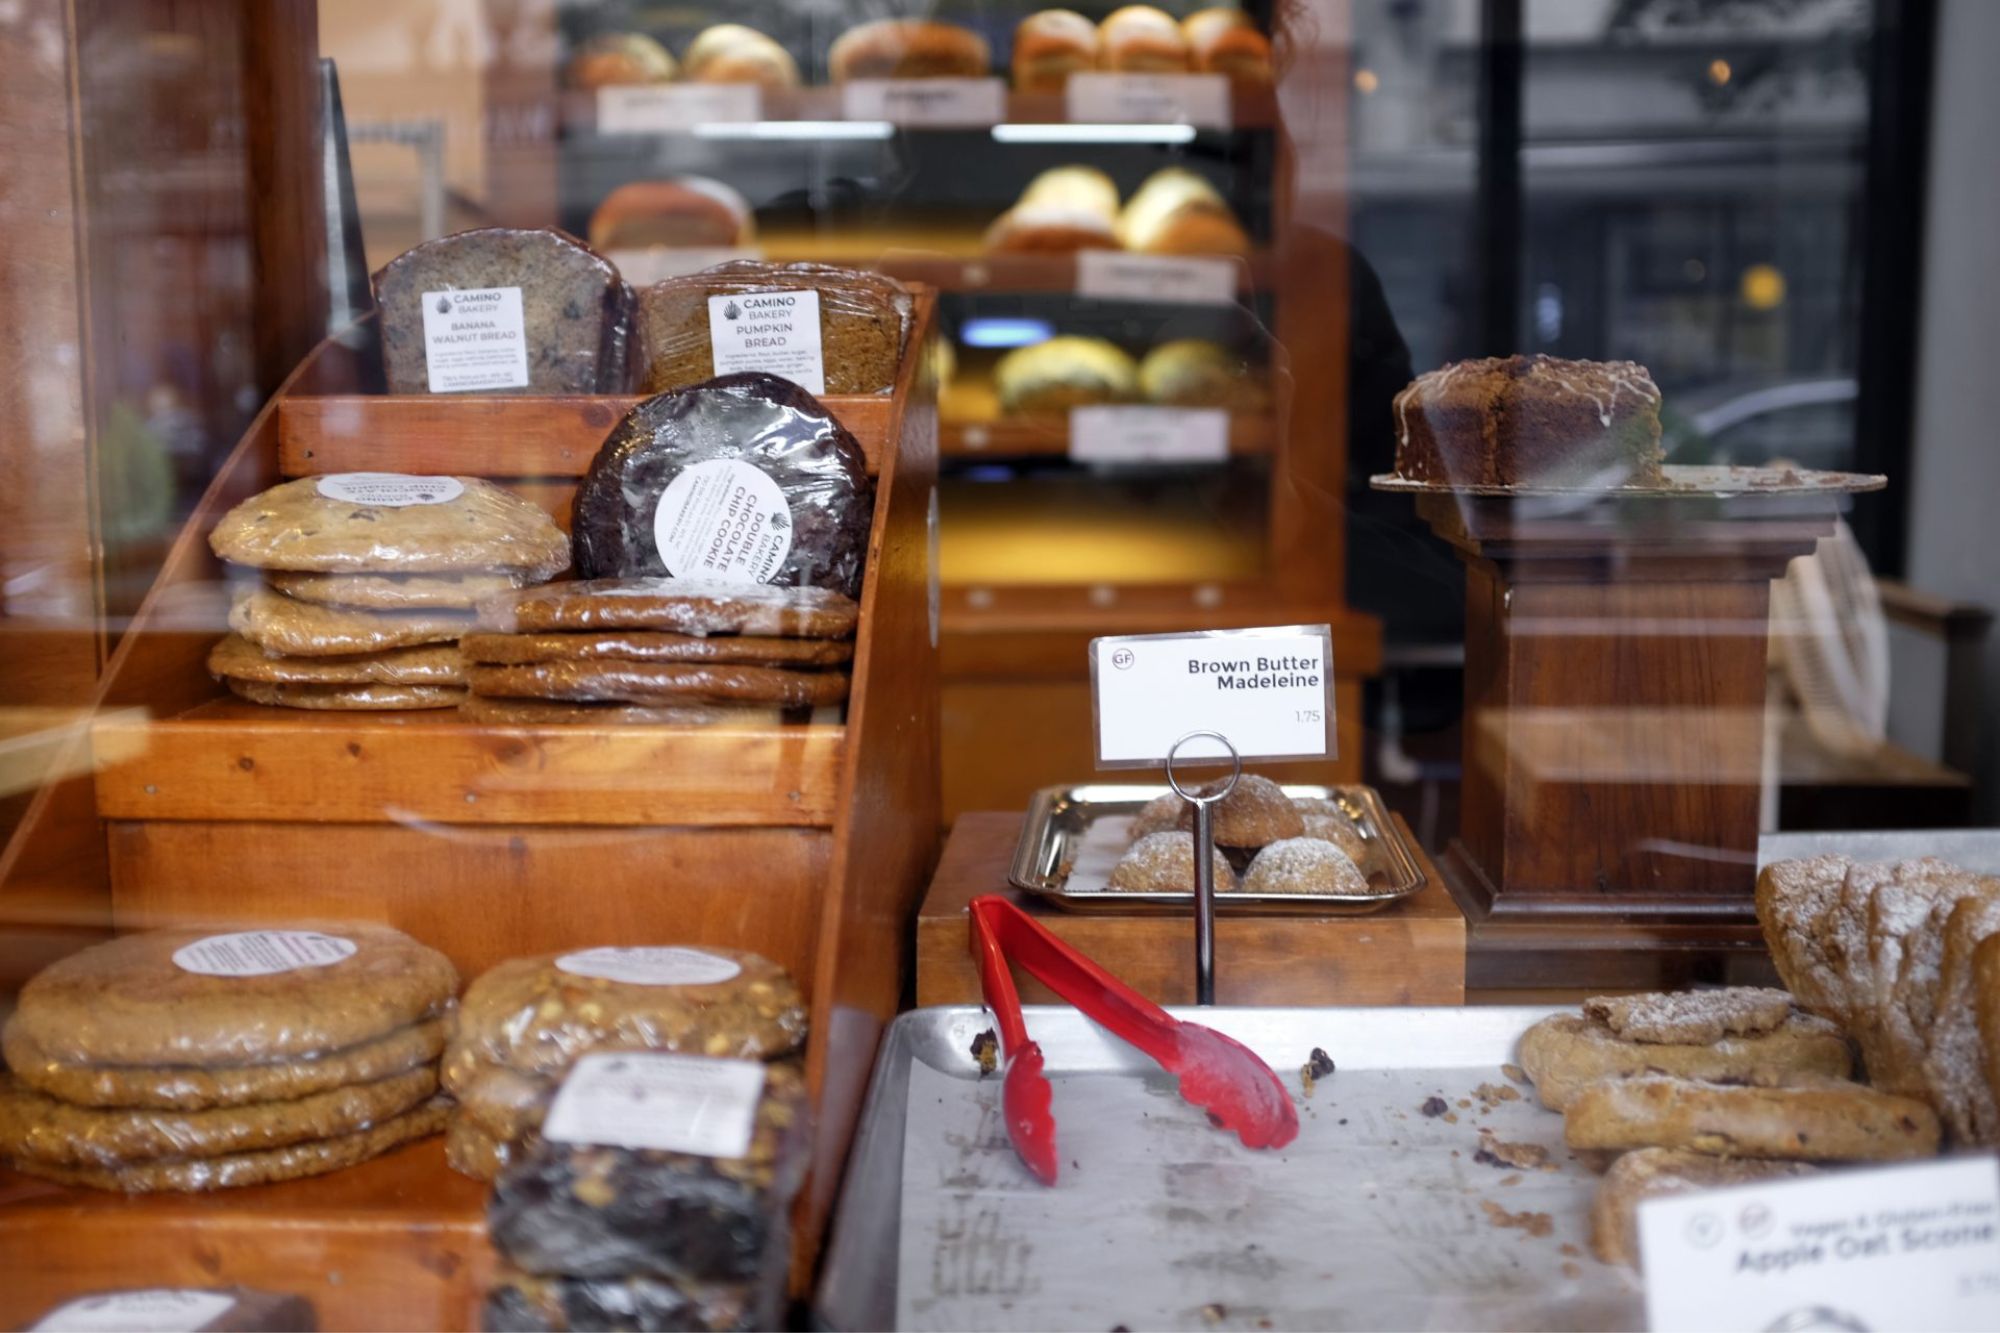 A pastry case at Camino Bakery